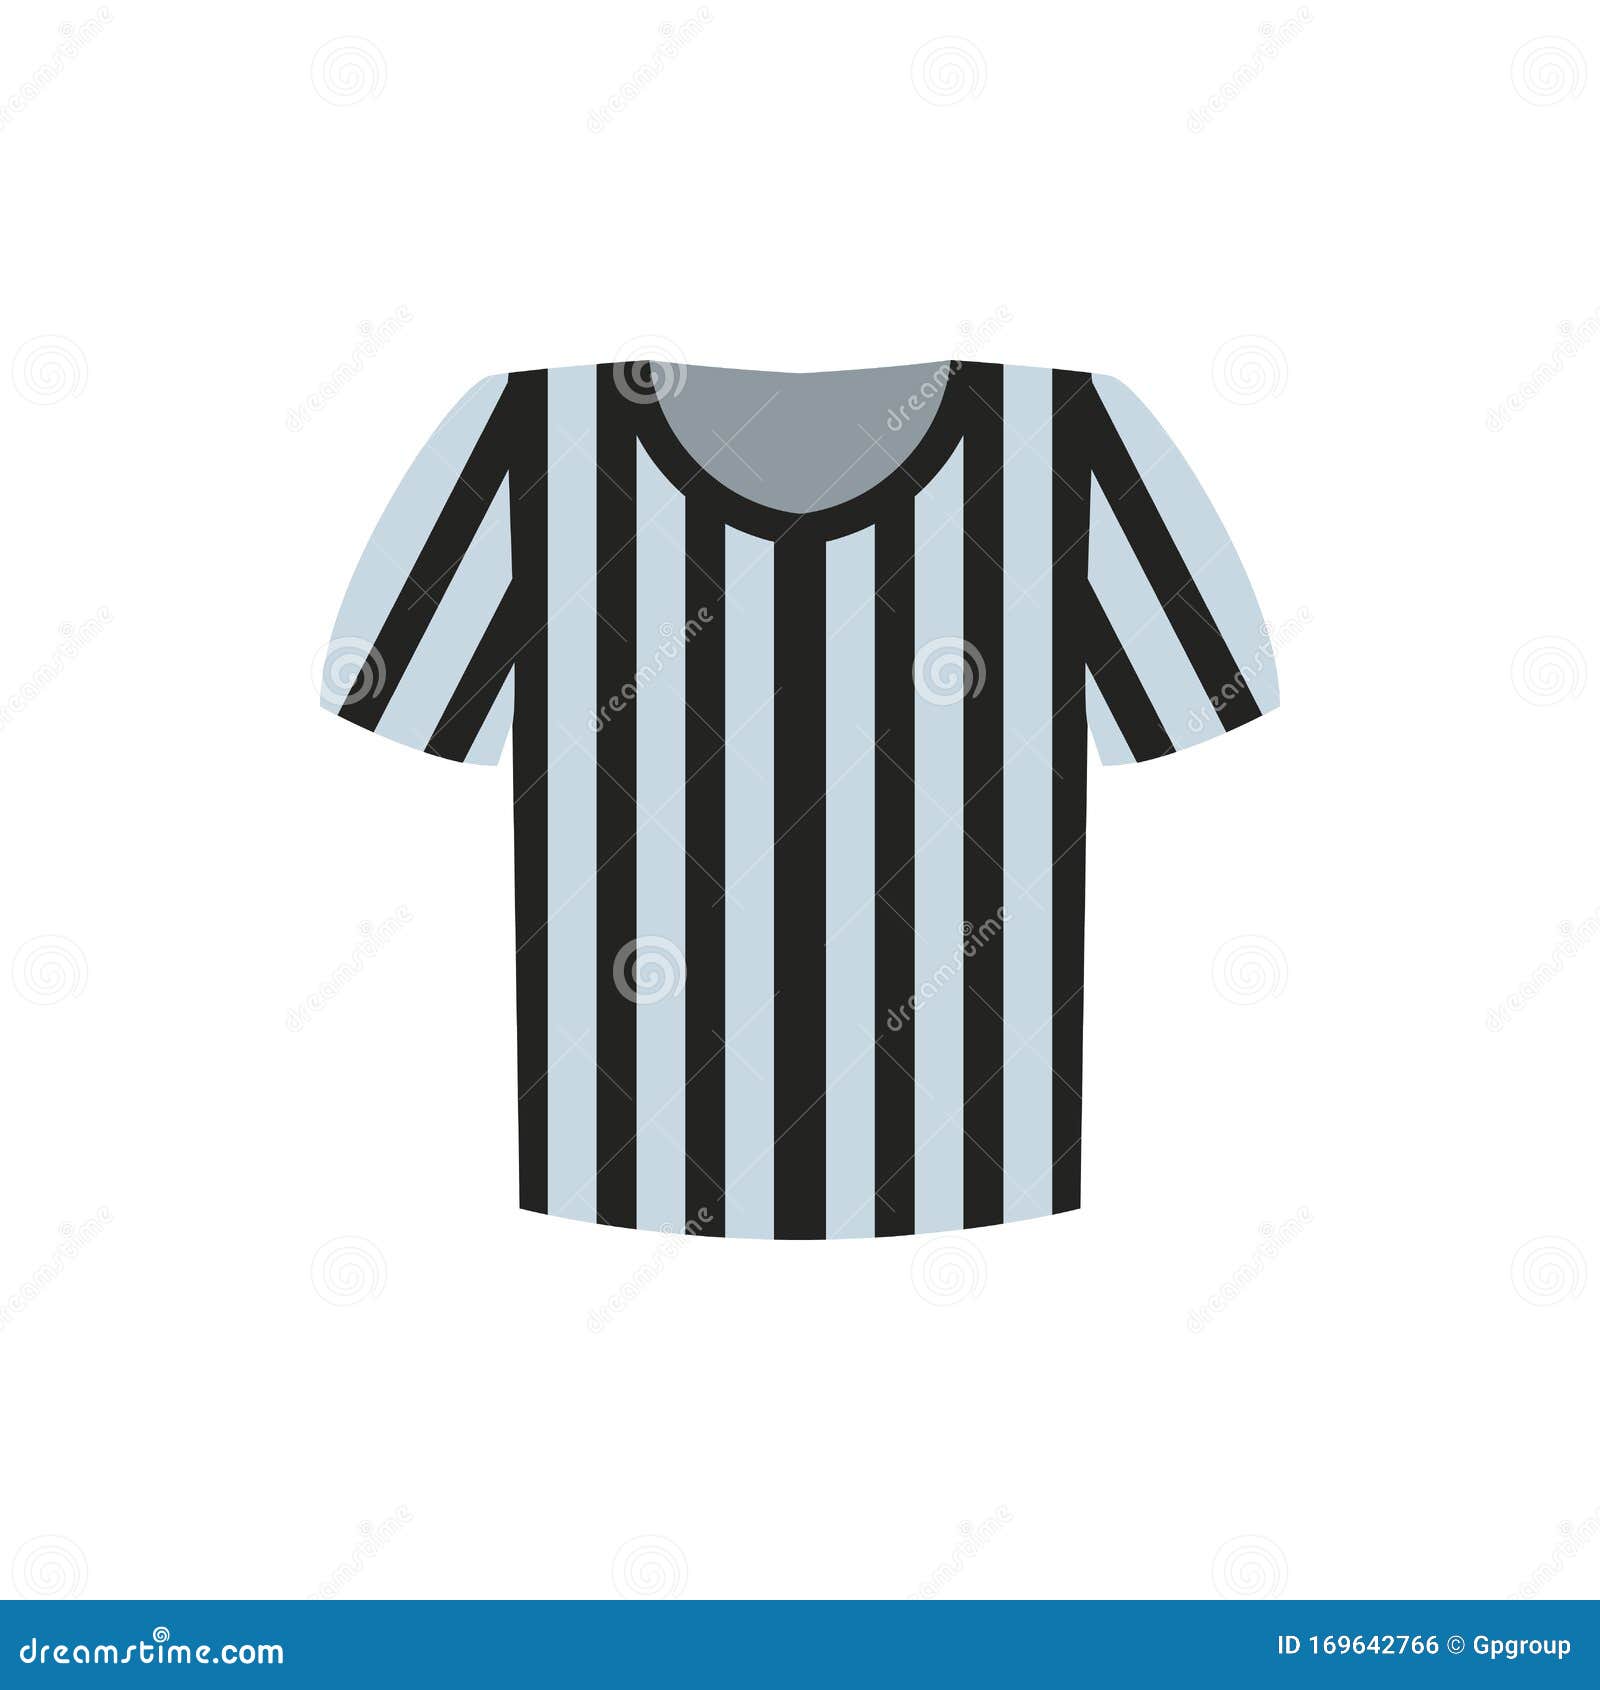 American Football Referee Tshirt Vector Design Stock Vector ...